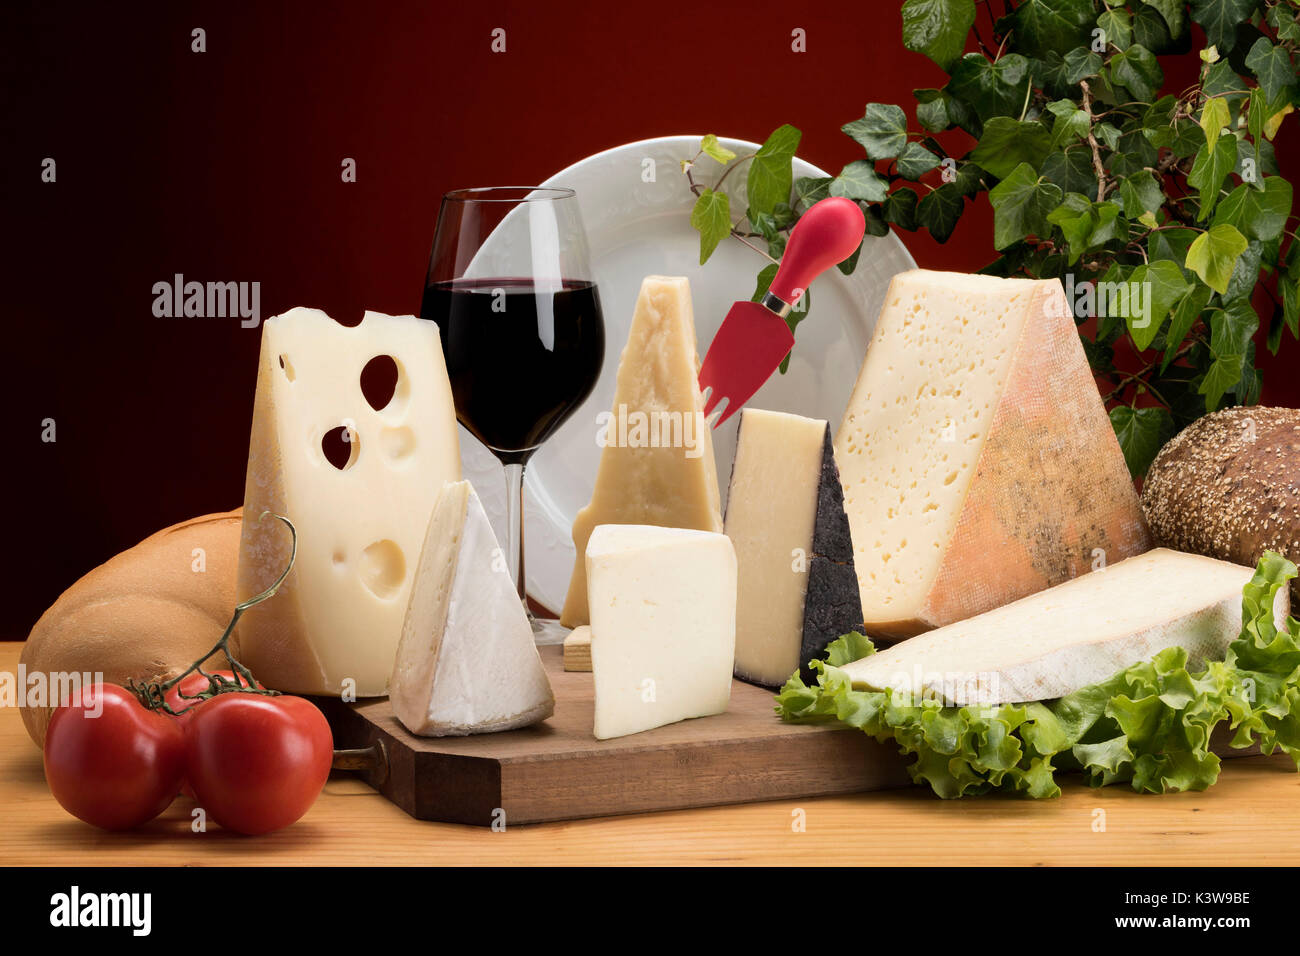 Cheese, Cheesy cheese, still life, Food, Stock Photo